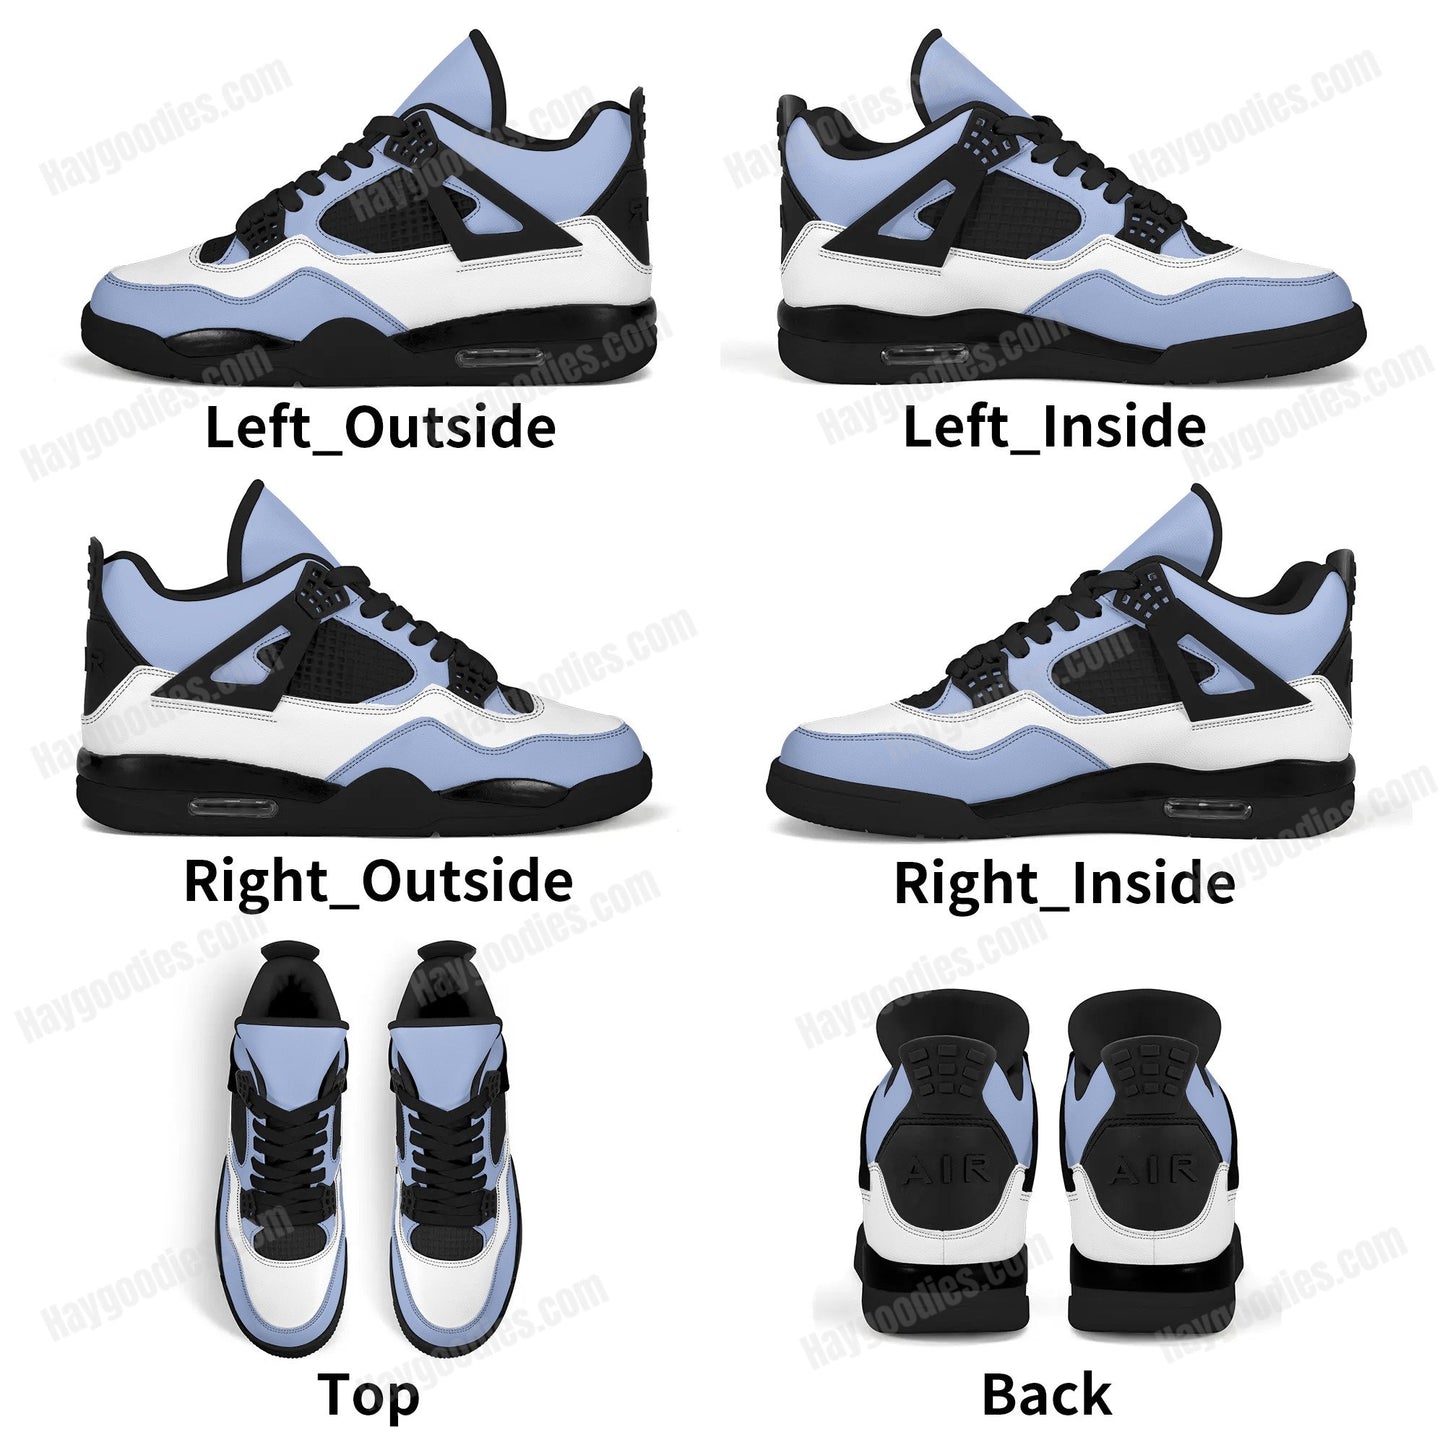 Powder Blue Color Mix Retro Low Top J4 Style Sneakers